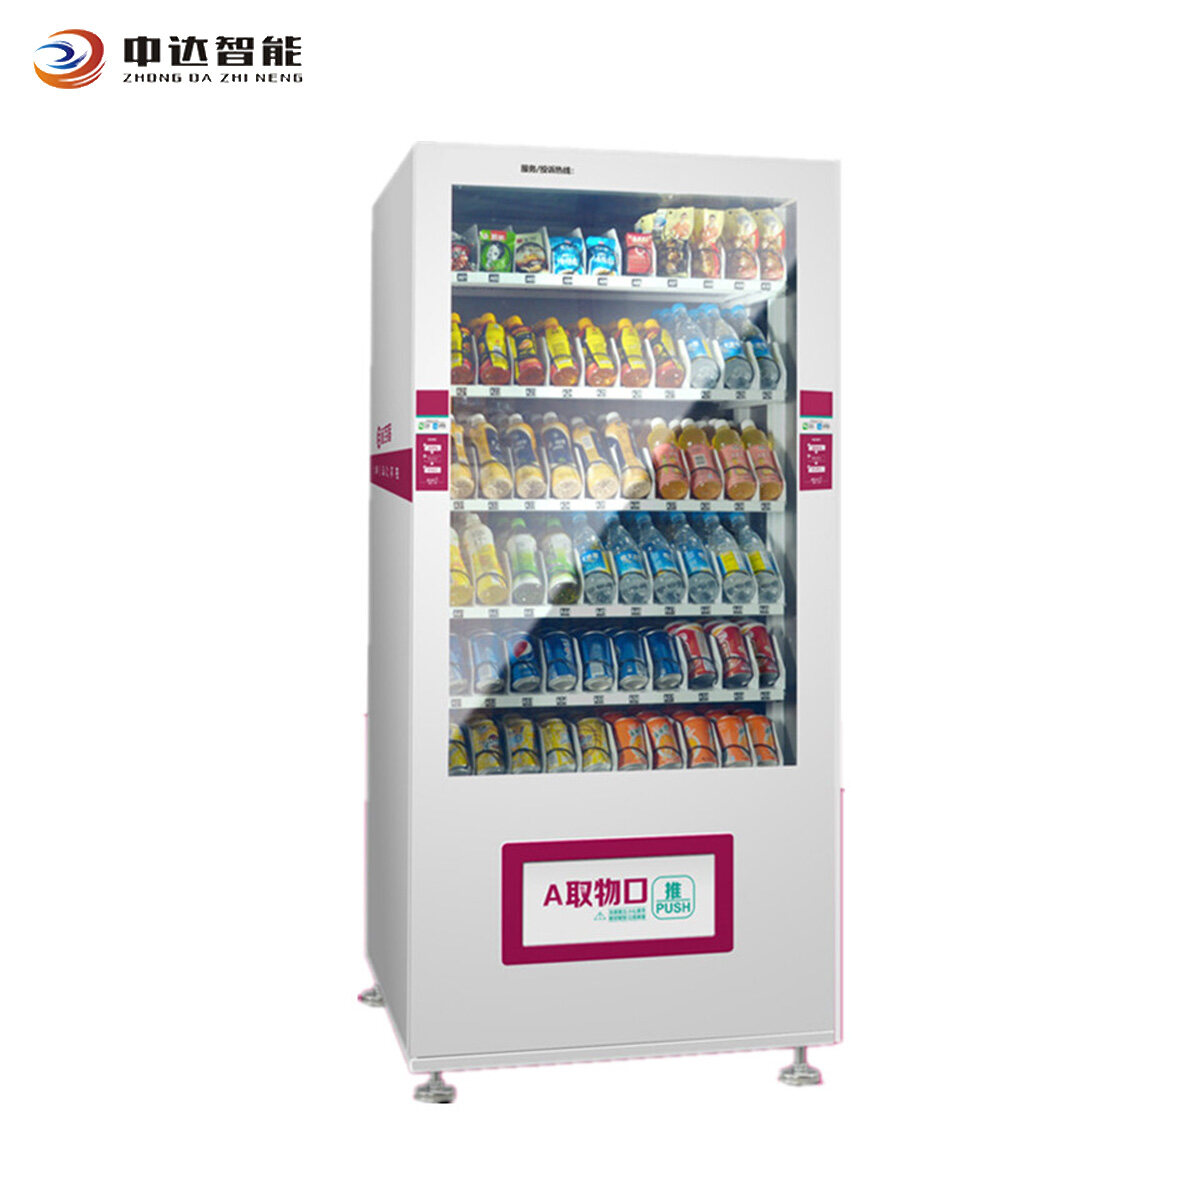 vending machine with snacks